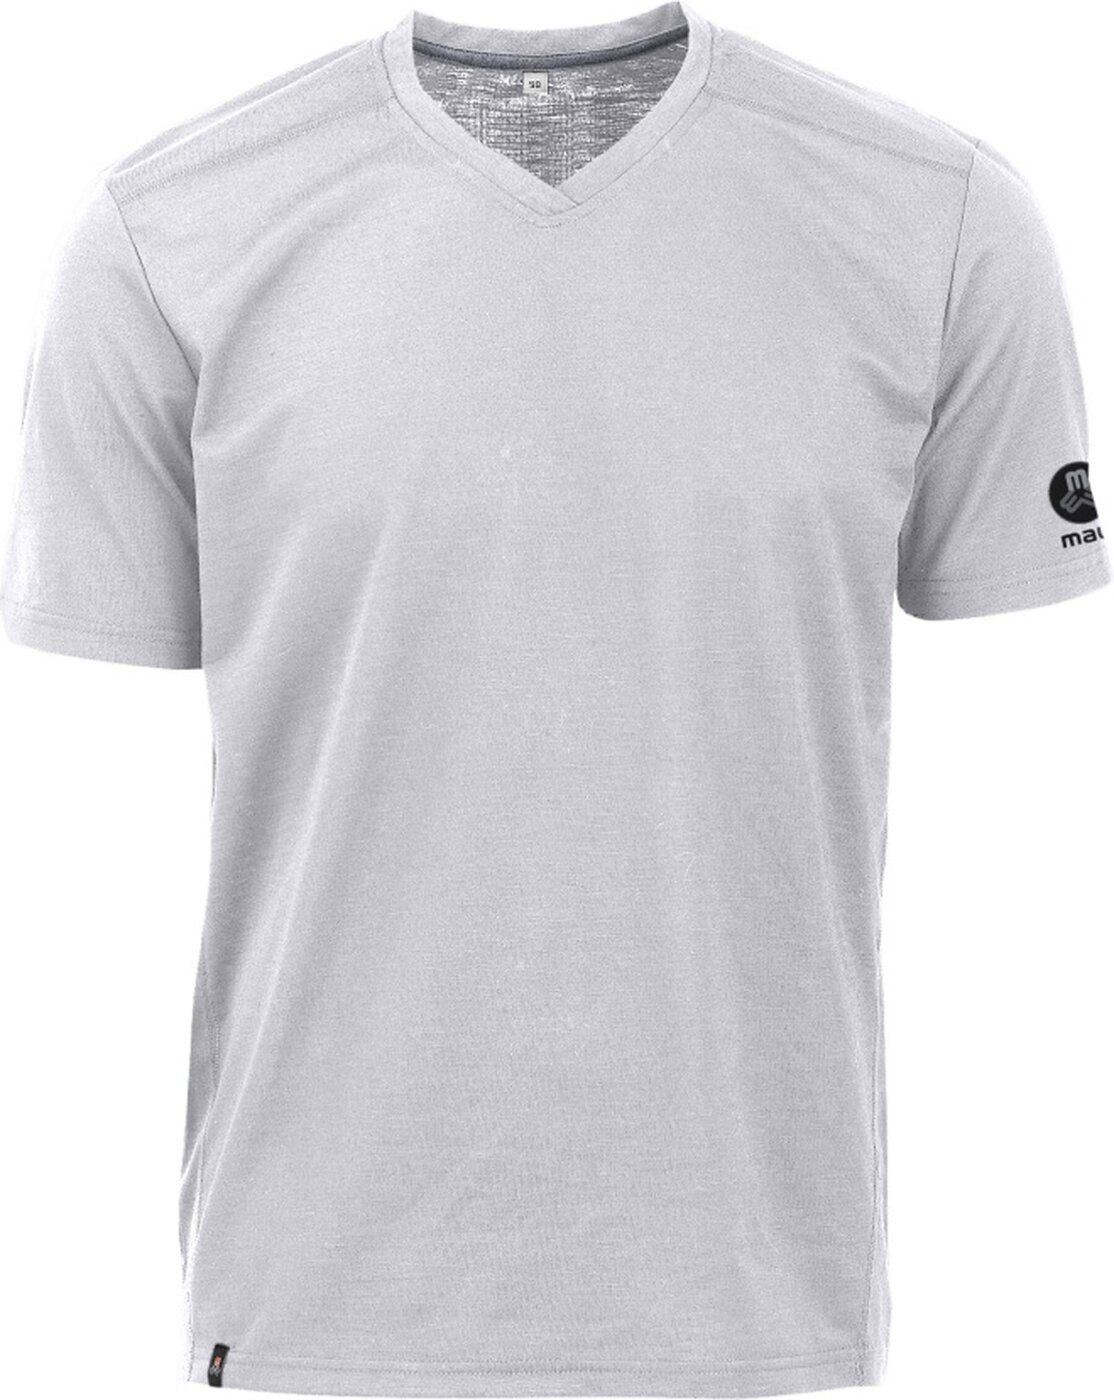 Maul Funktionsshirt Mike fresh - 1/2 T-Shirt